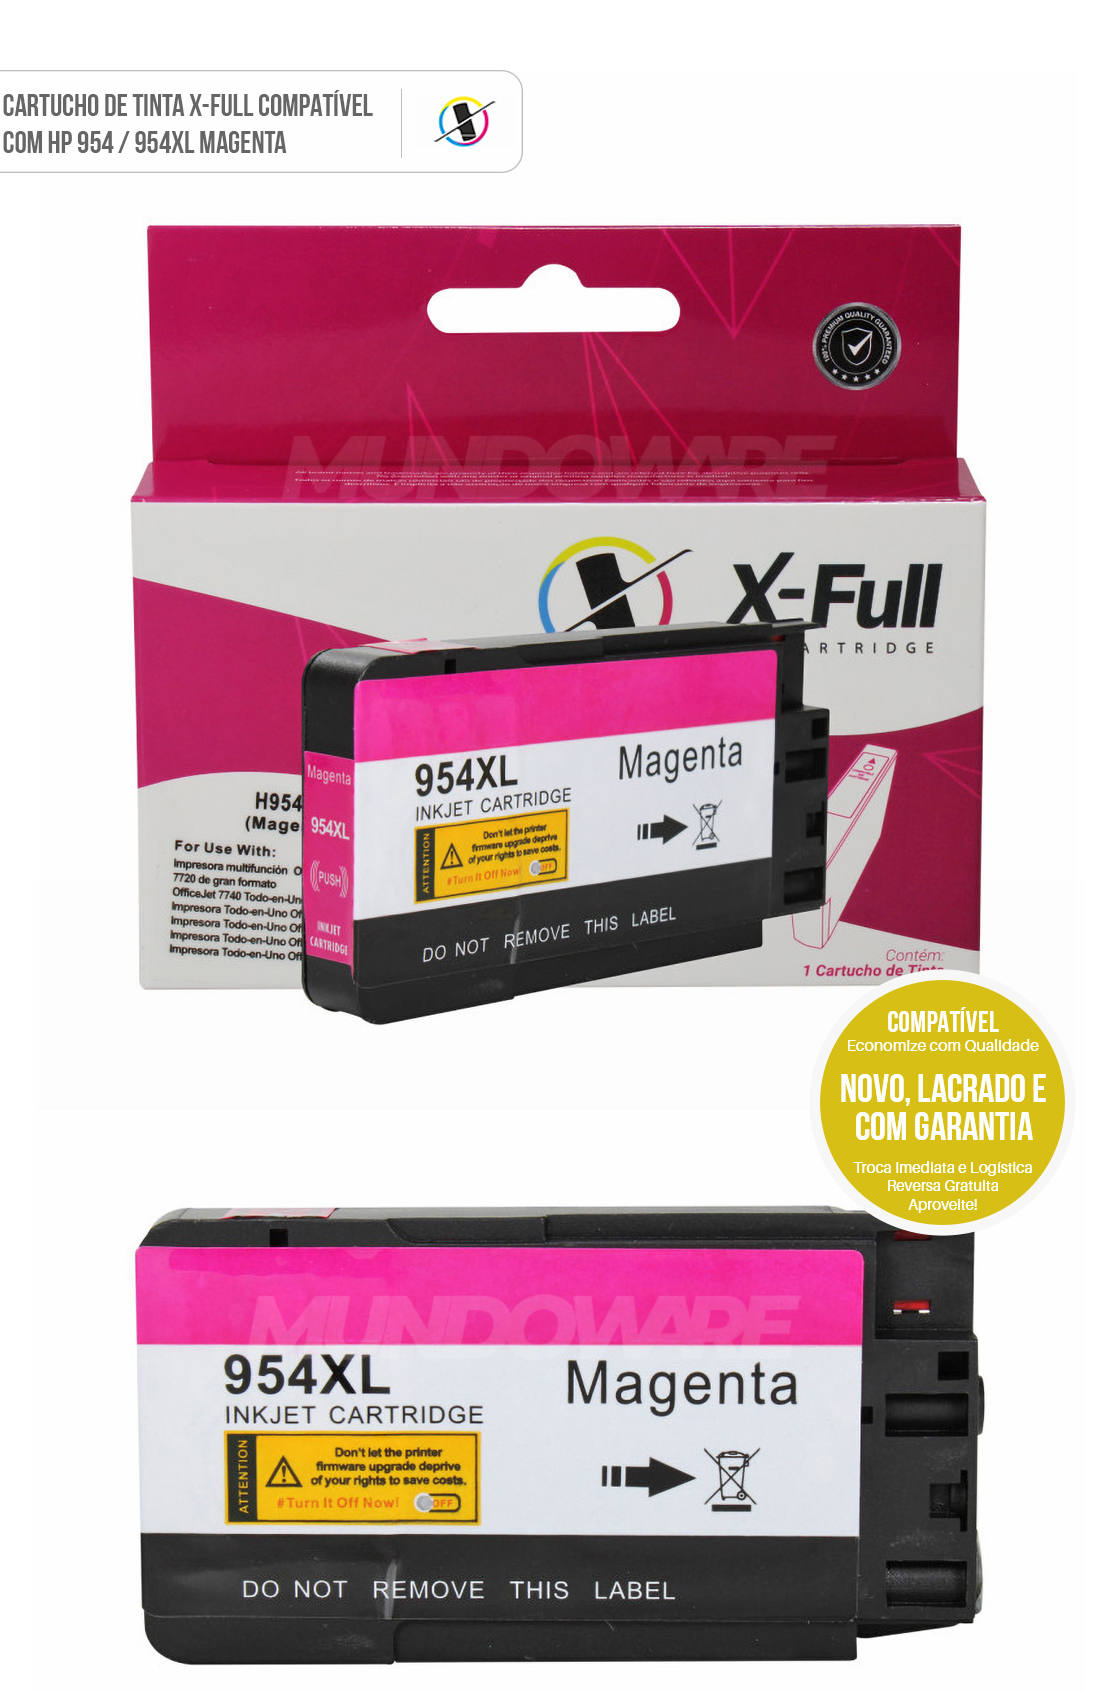 Cartucho de Tinta X-Full Compatível com HP 954xl 954 para Impressora Pro 7720 7740 8210 8710 8720 8730 Magenta 27ml